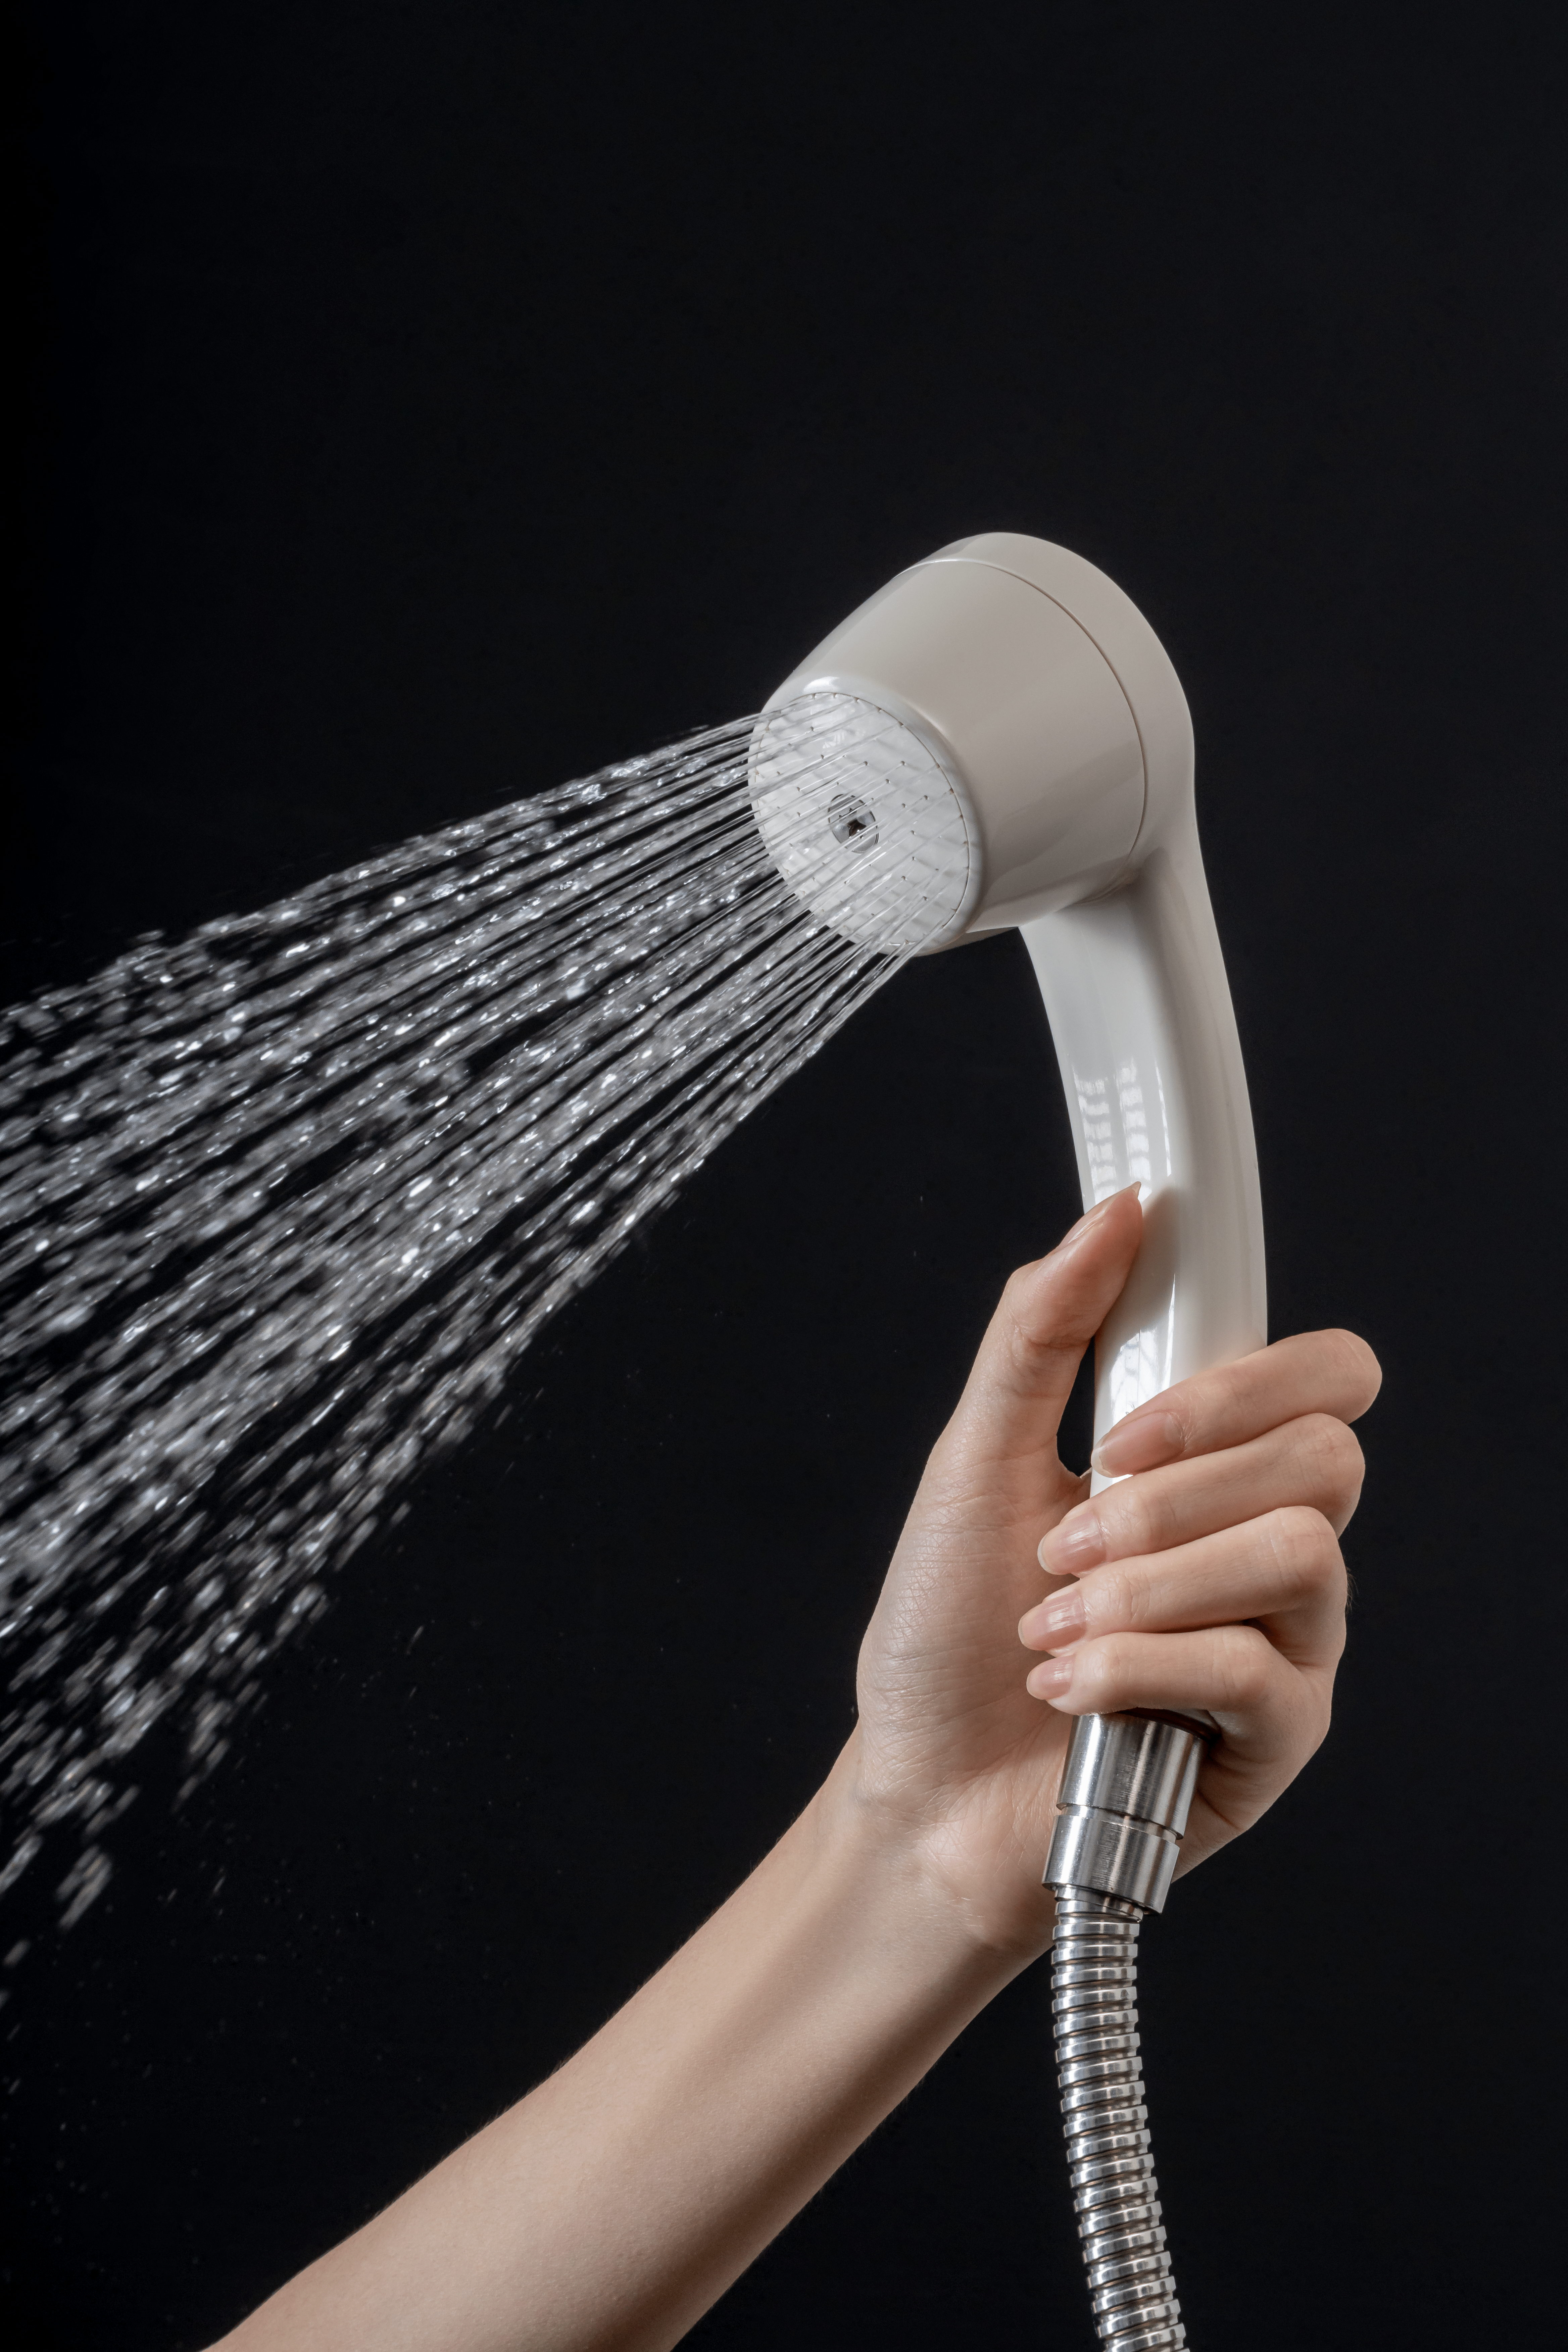 De-chlorinating shower